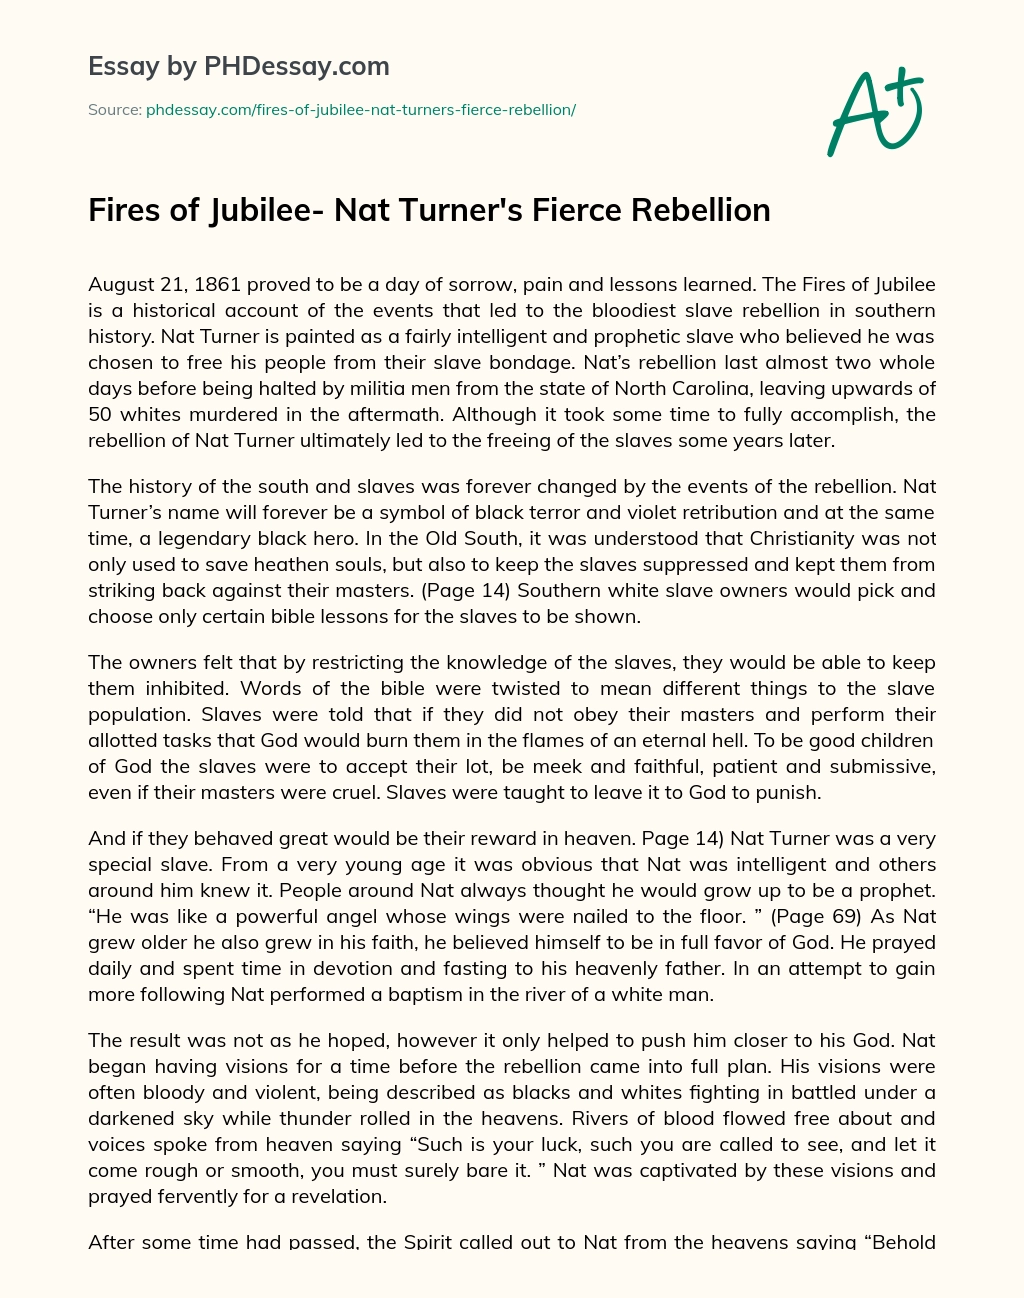 Fires of Jubilee- Nat Turner’s Fierce Rebellion essay